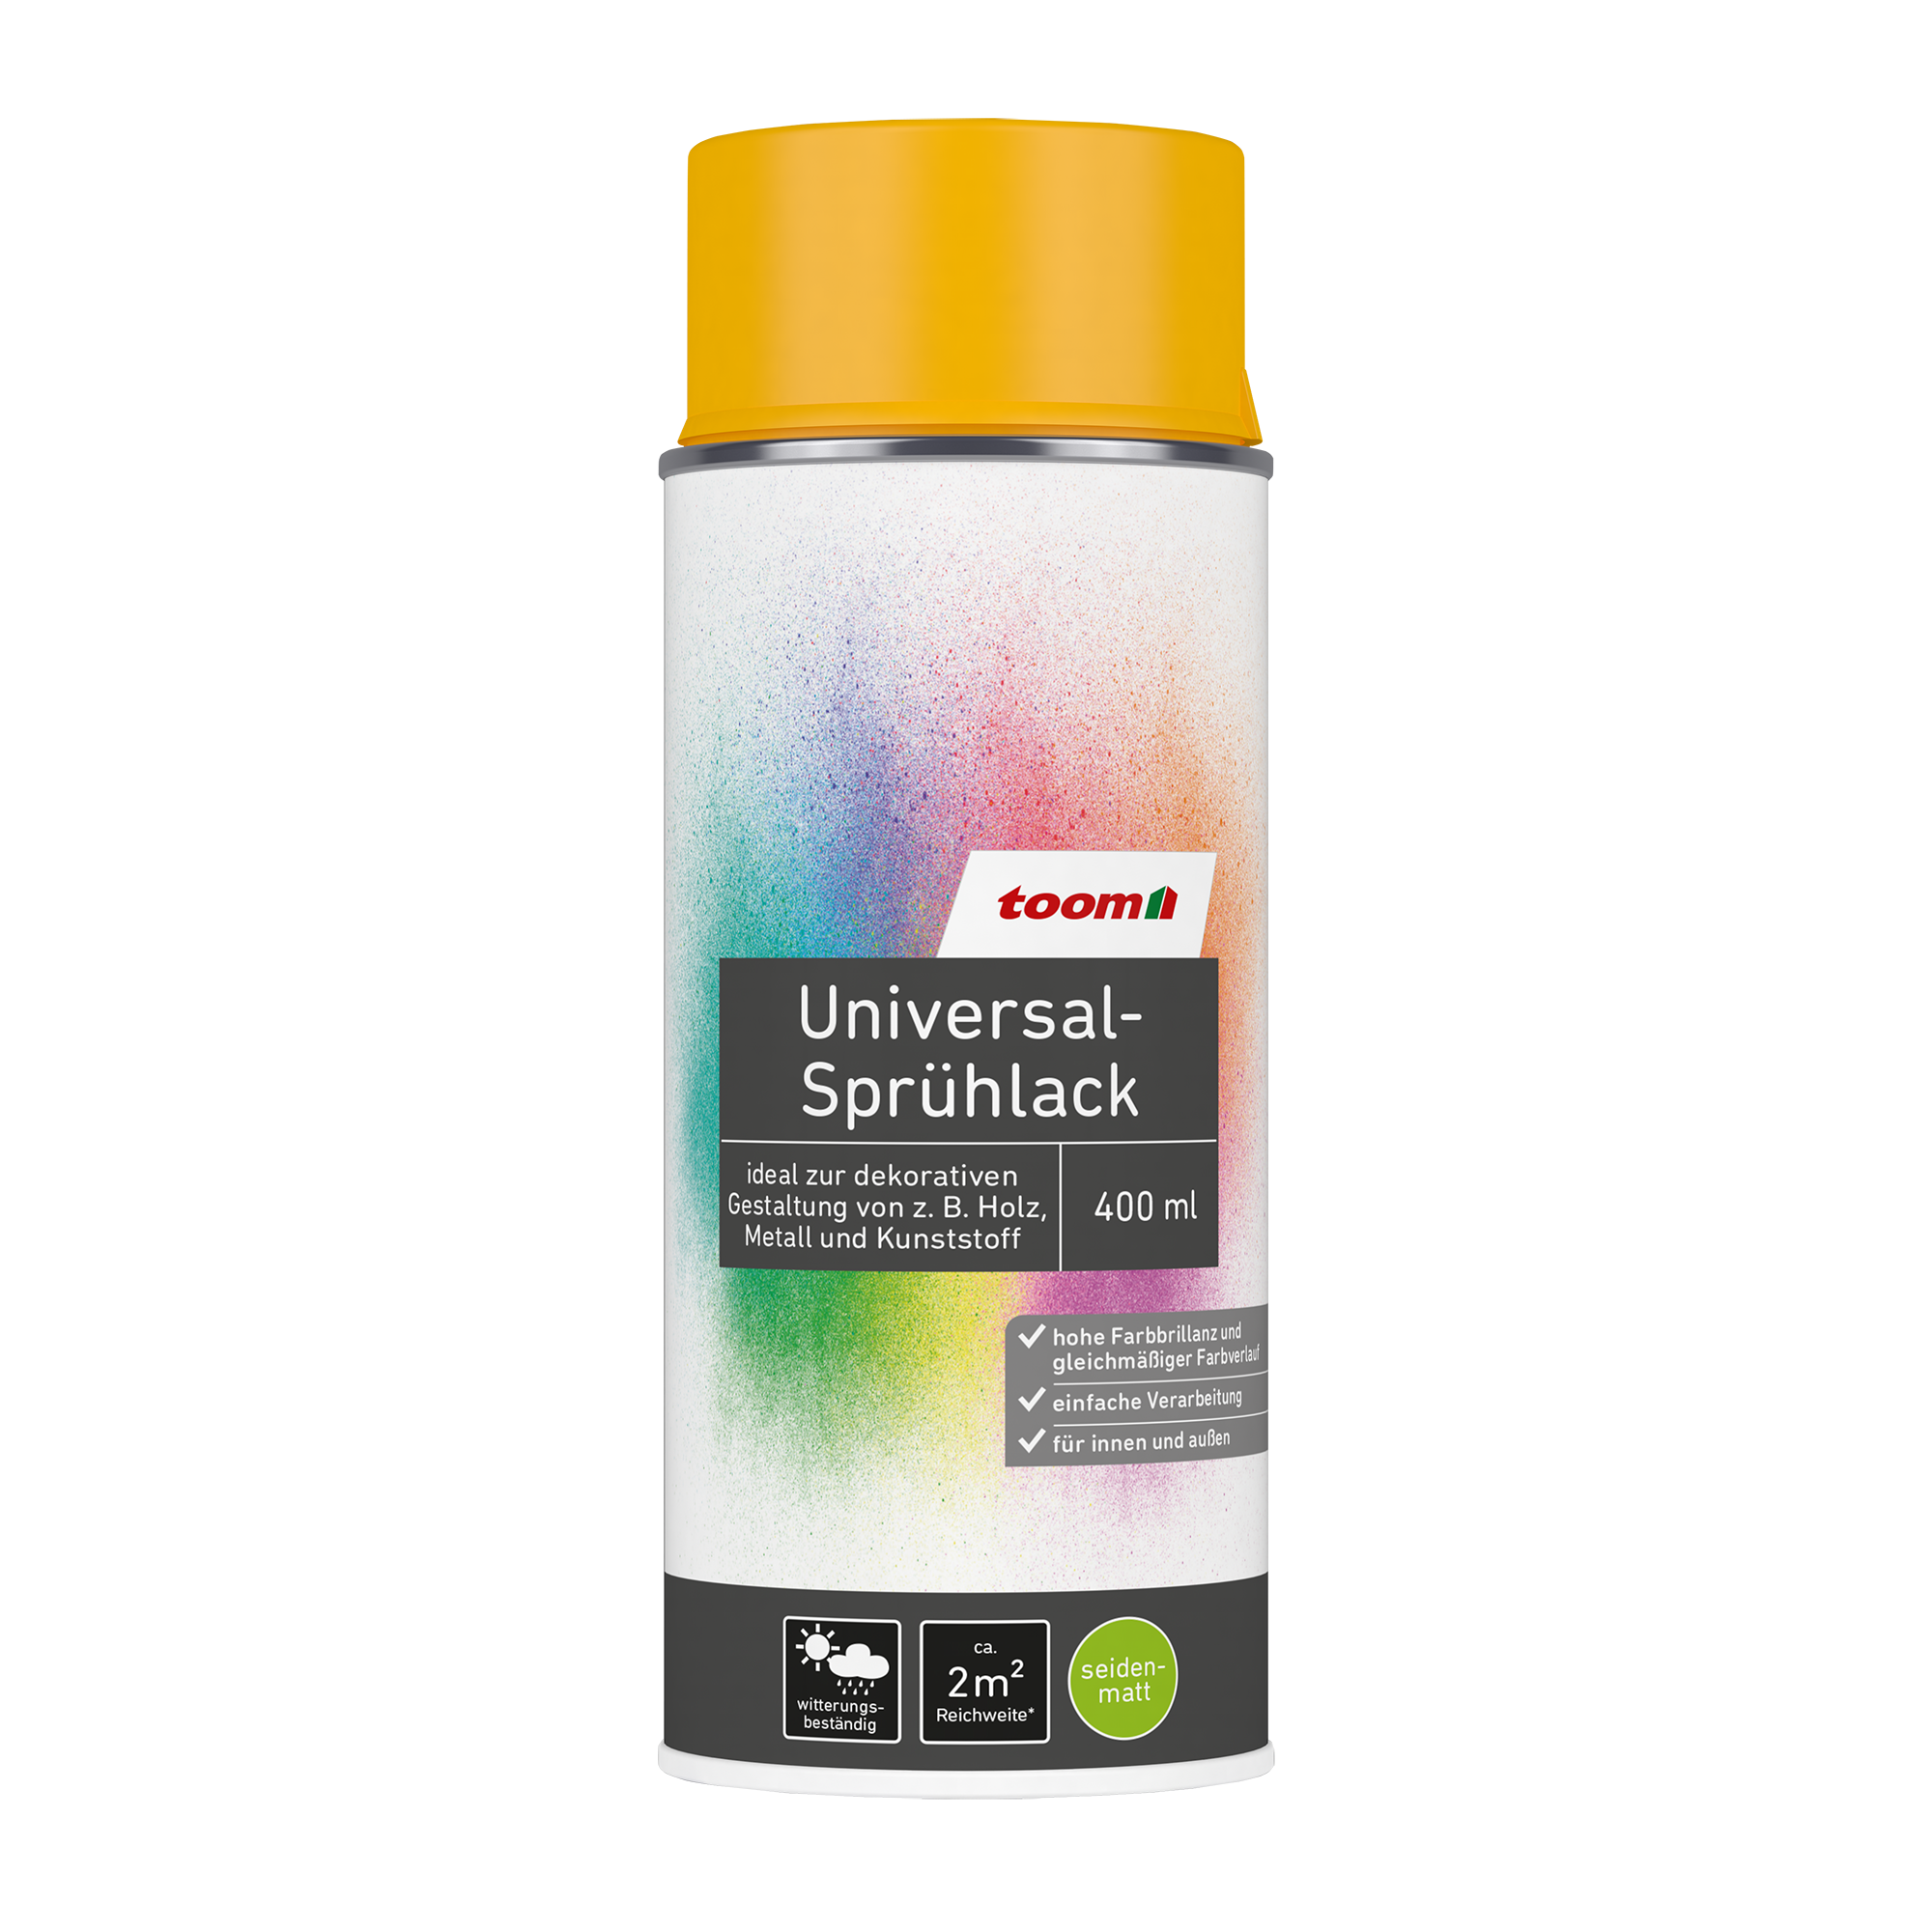 Universal-Sprühlack 'Sonnenblume' orangegelb seidenmatt 400 ml + product picture